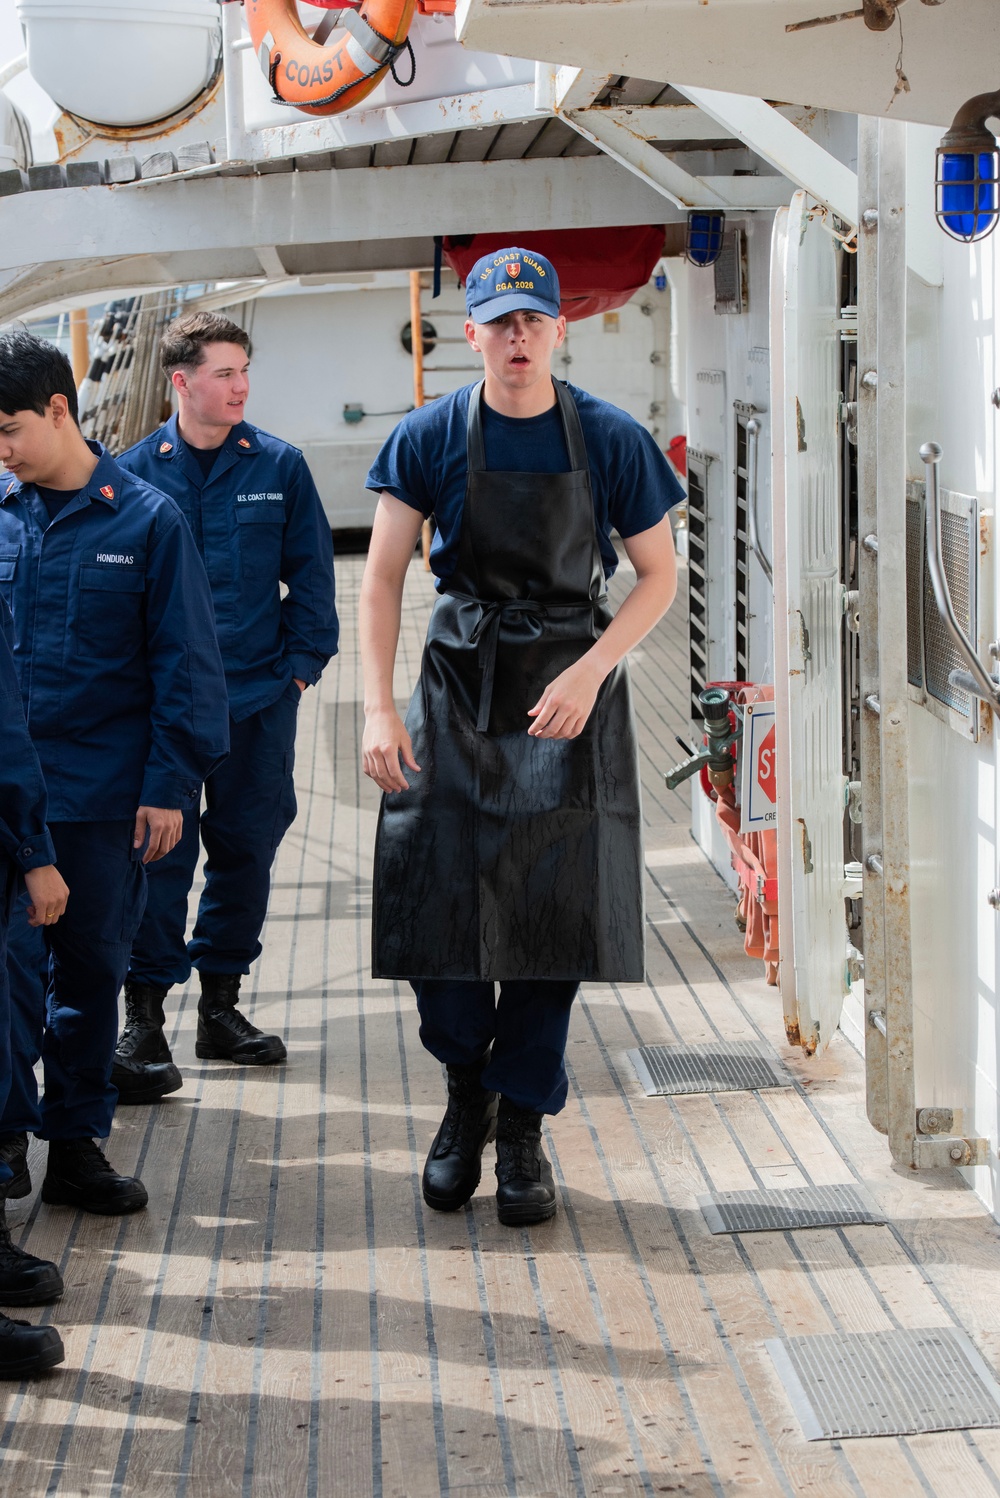 Cadet aboard USCGC Eagle prepares noon meal